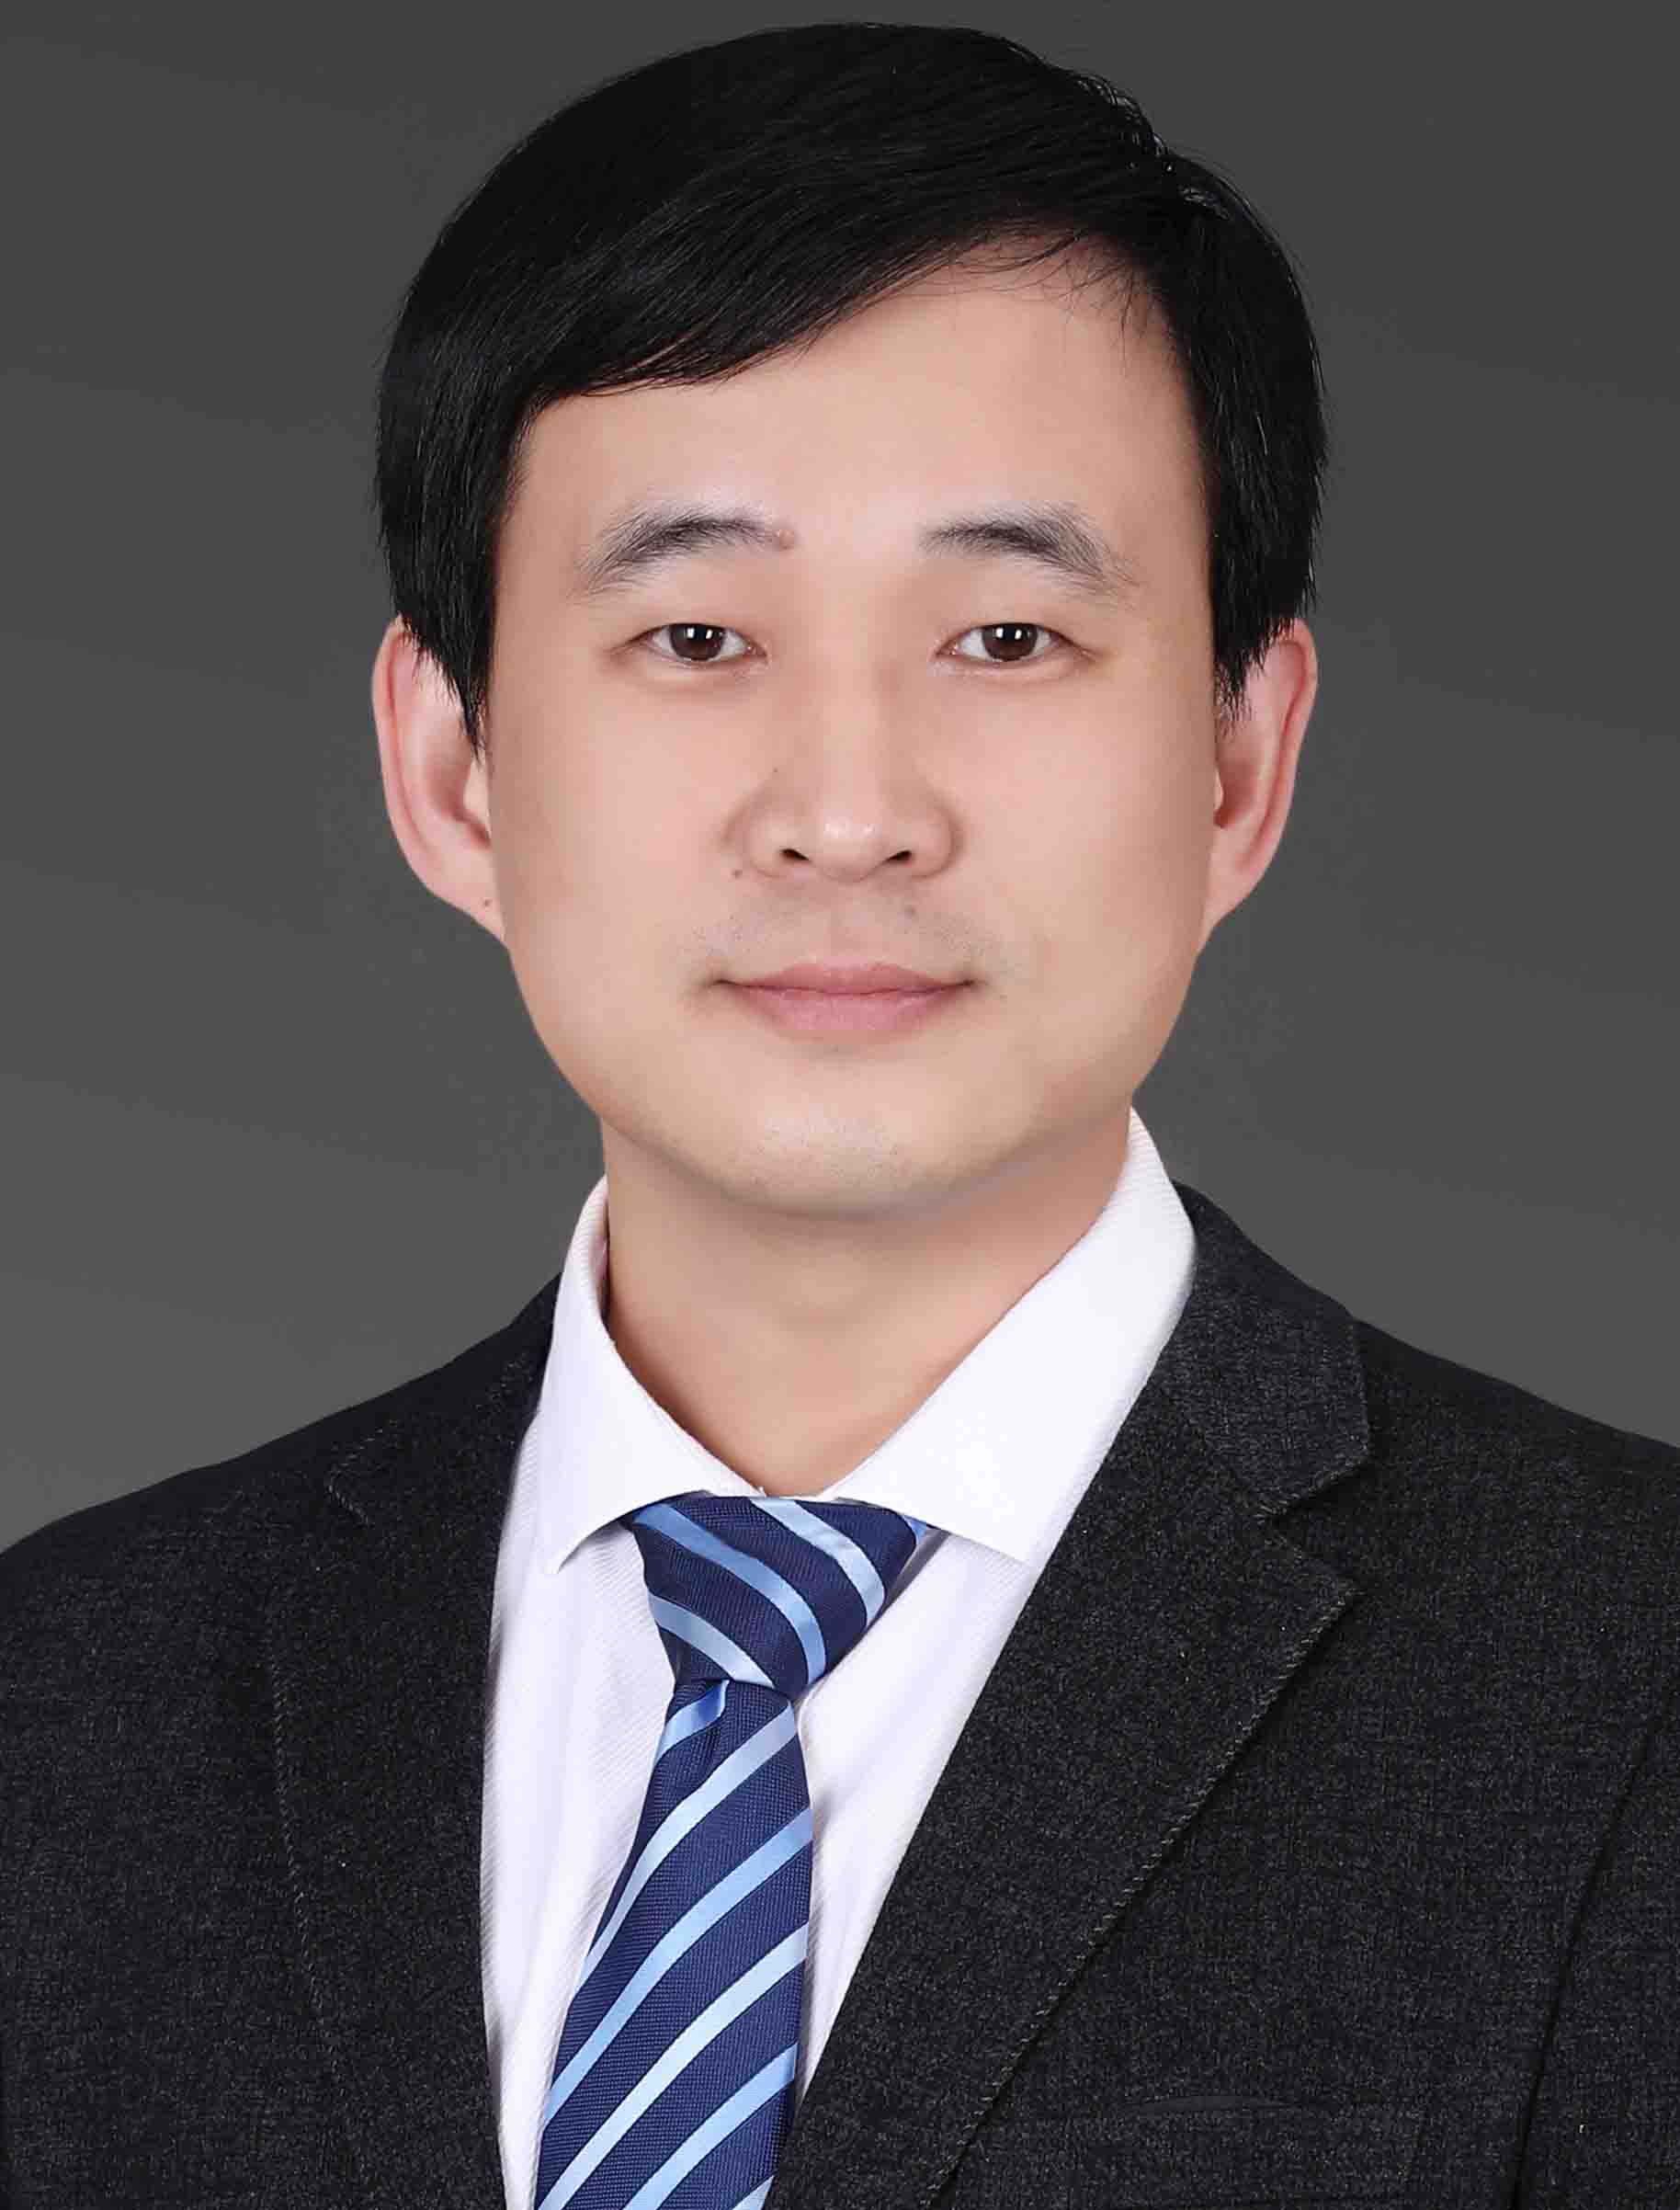 Prof. Daxin Tian